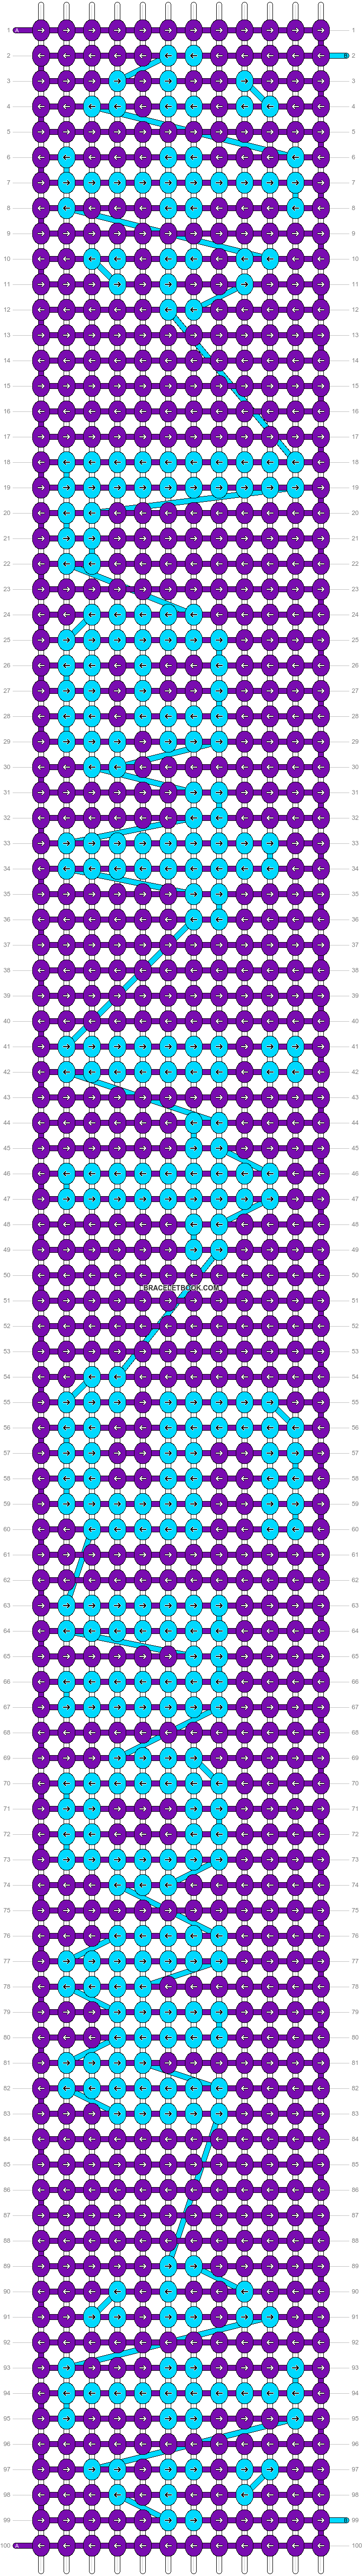 Alpha pattern #27311 variation #11098 pattern